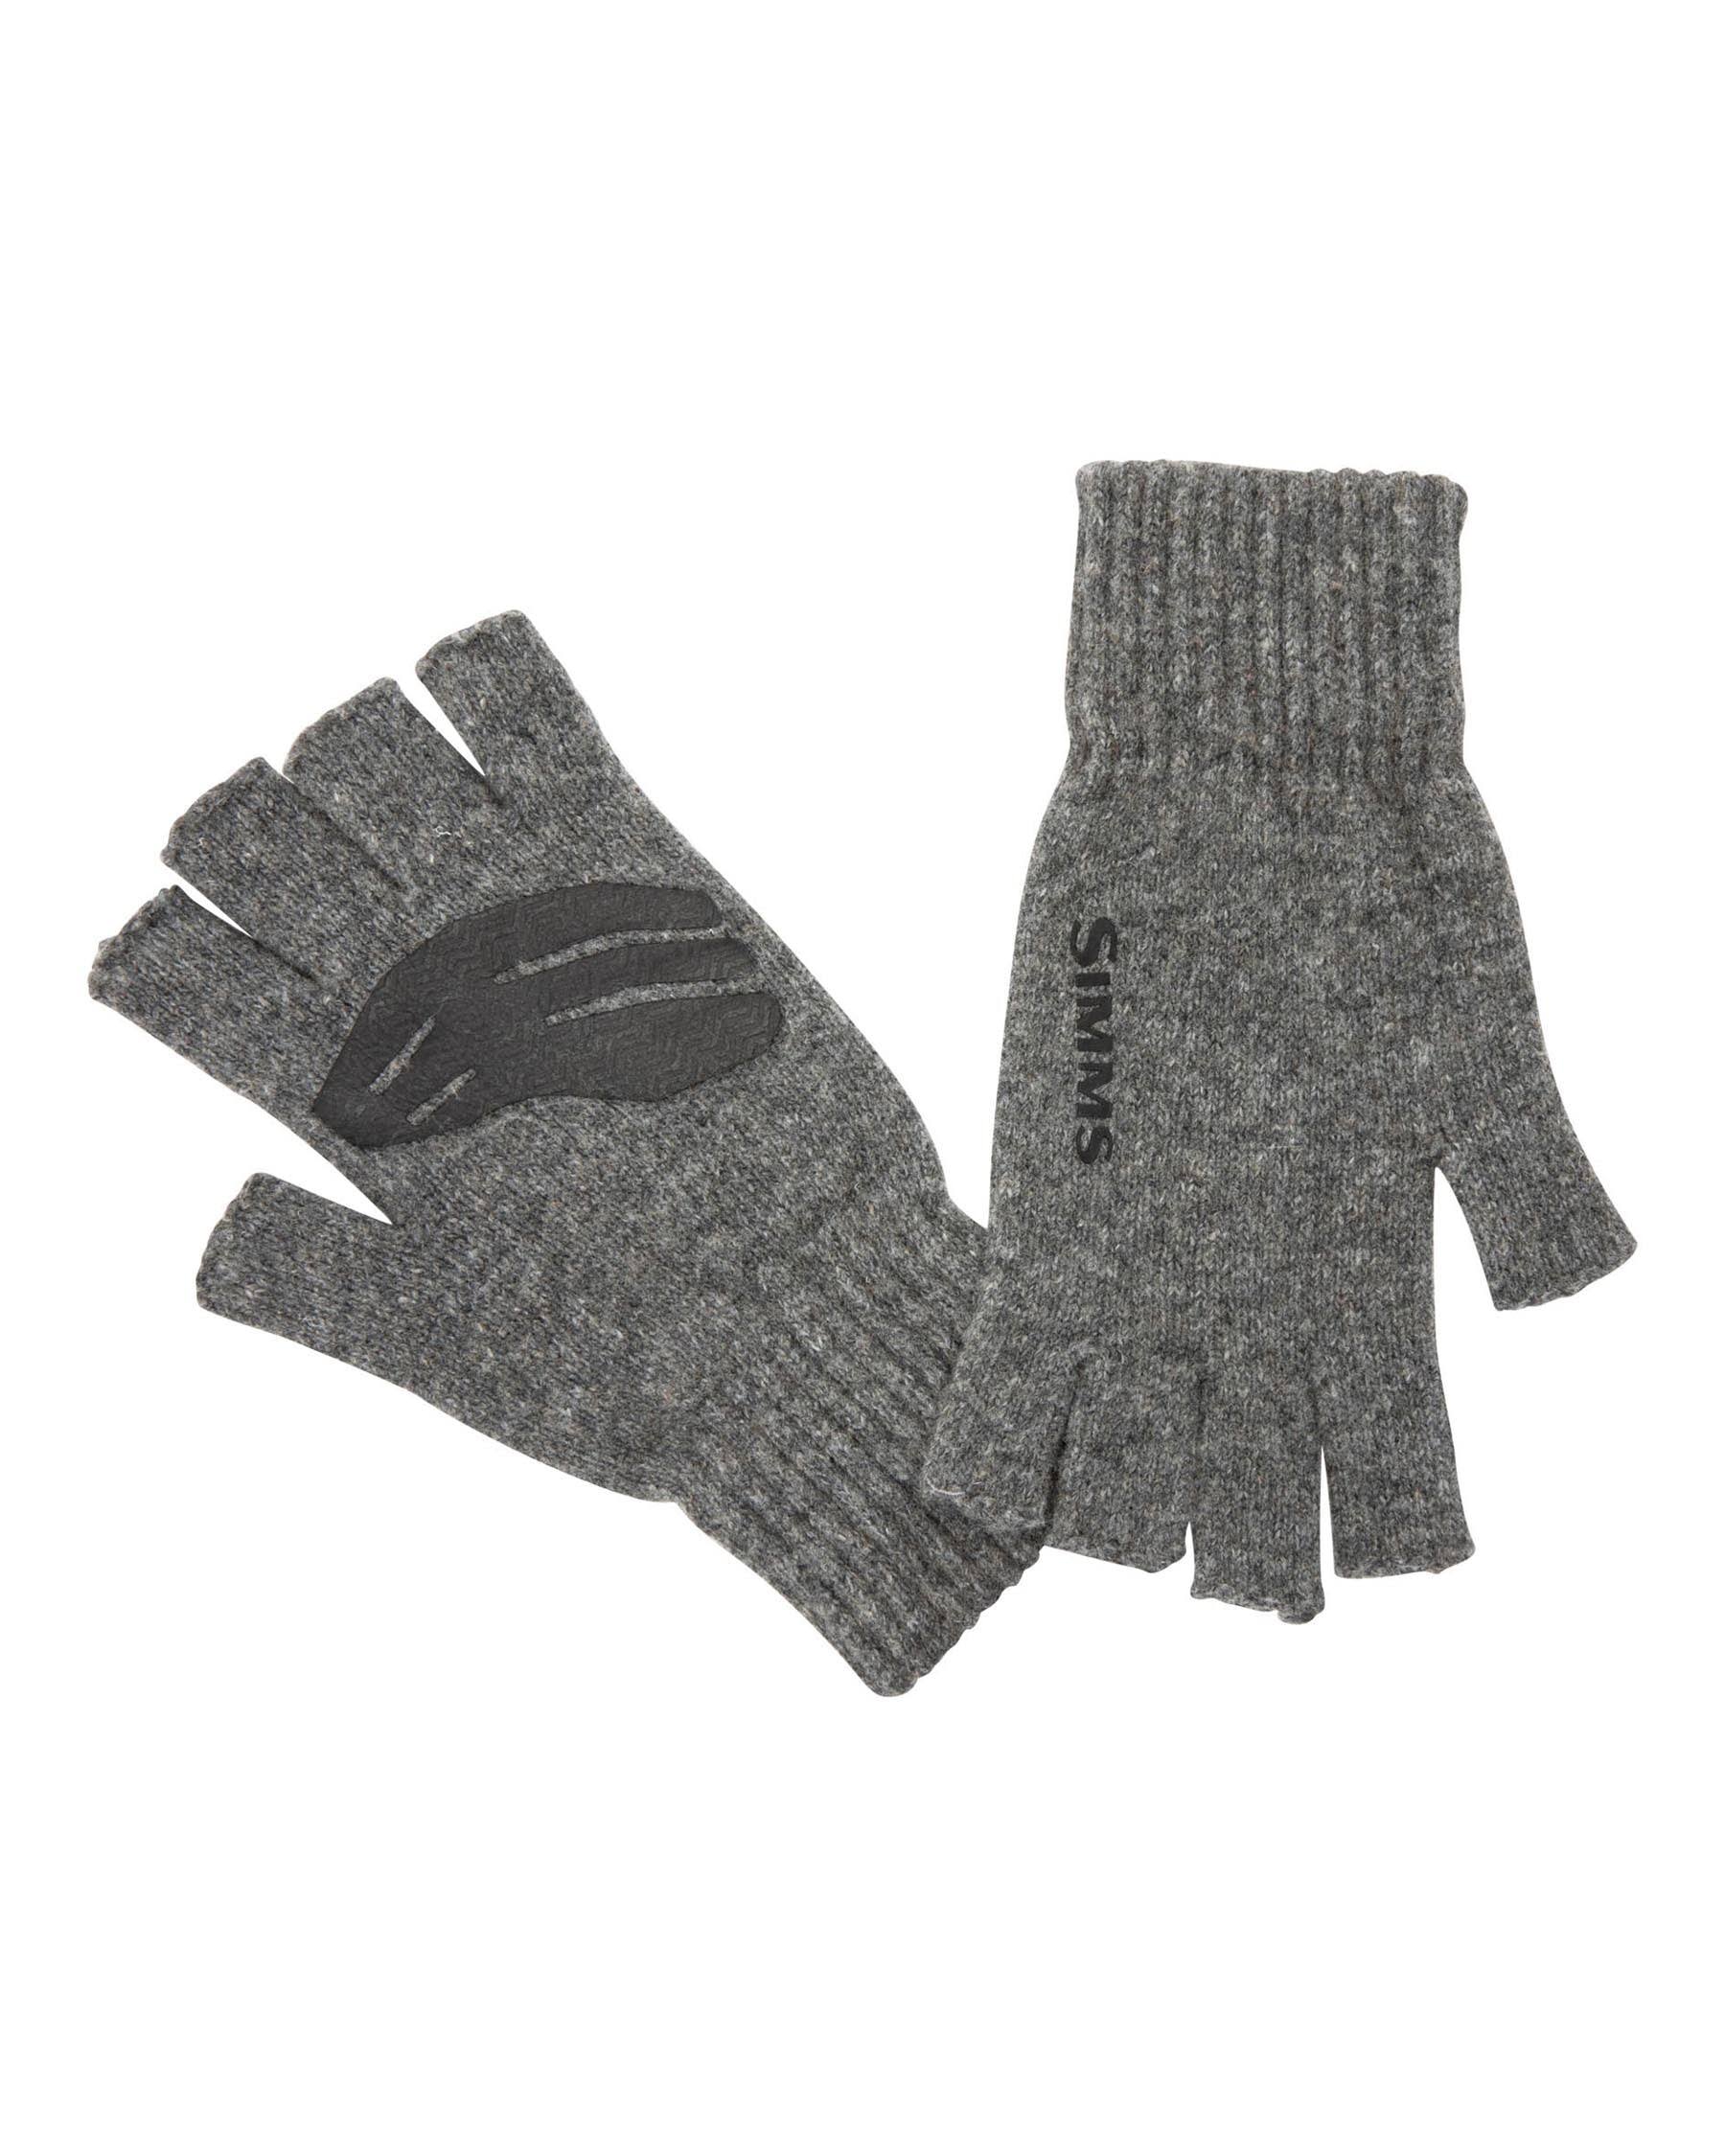 Simms Wool Half Finger Glove - L/XL